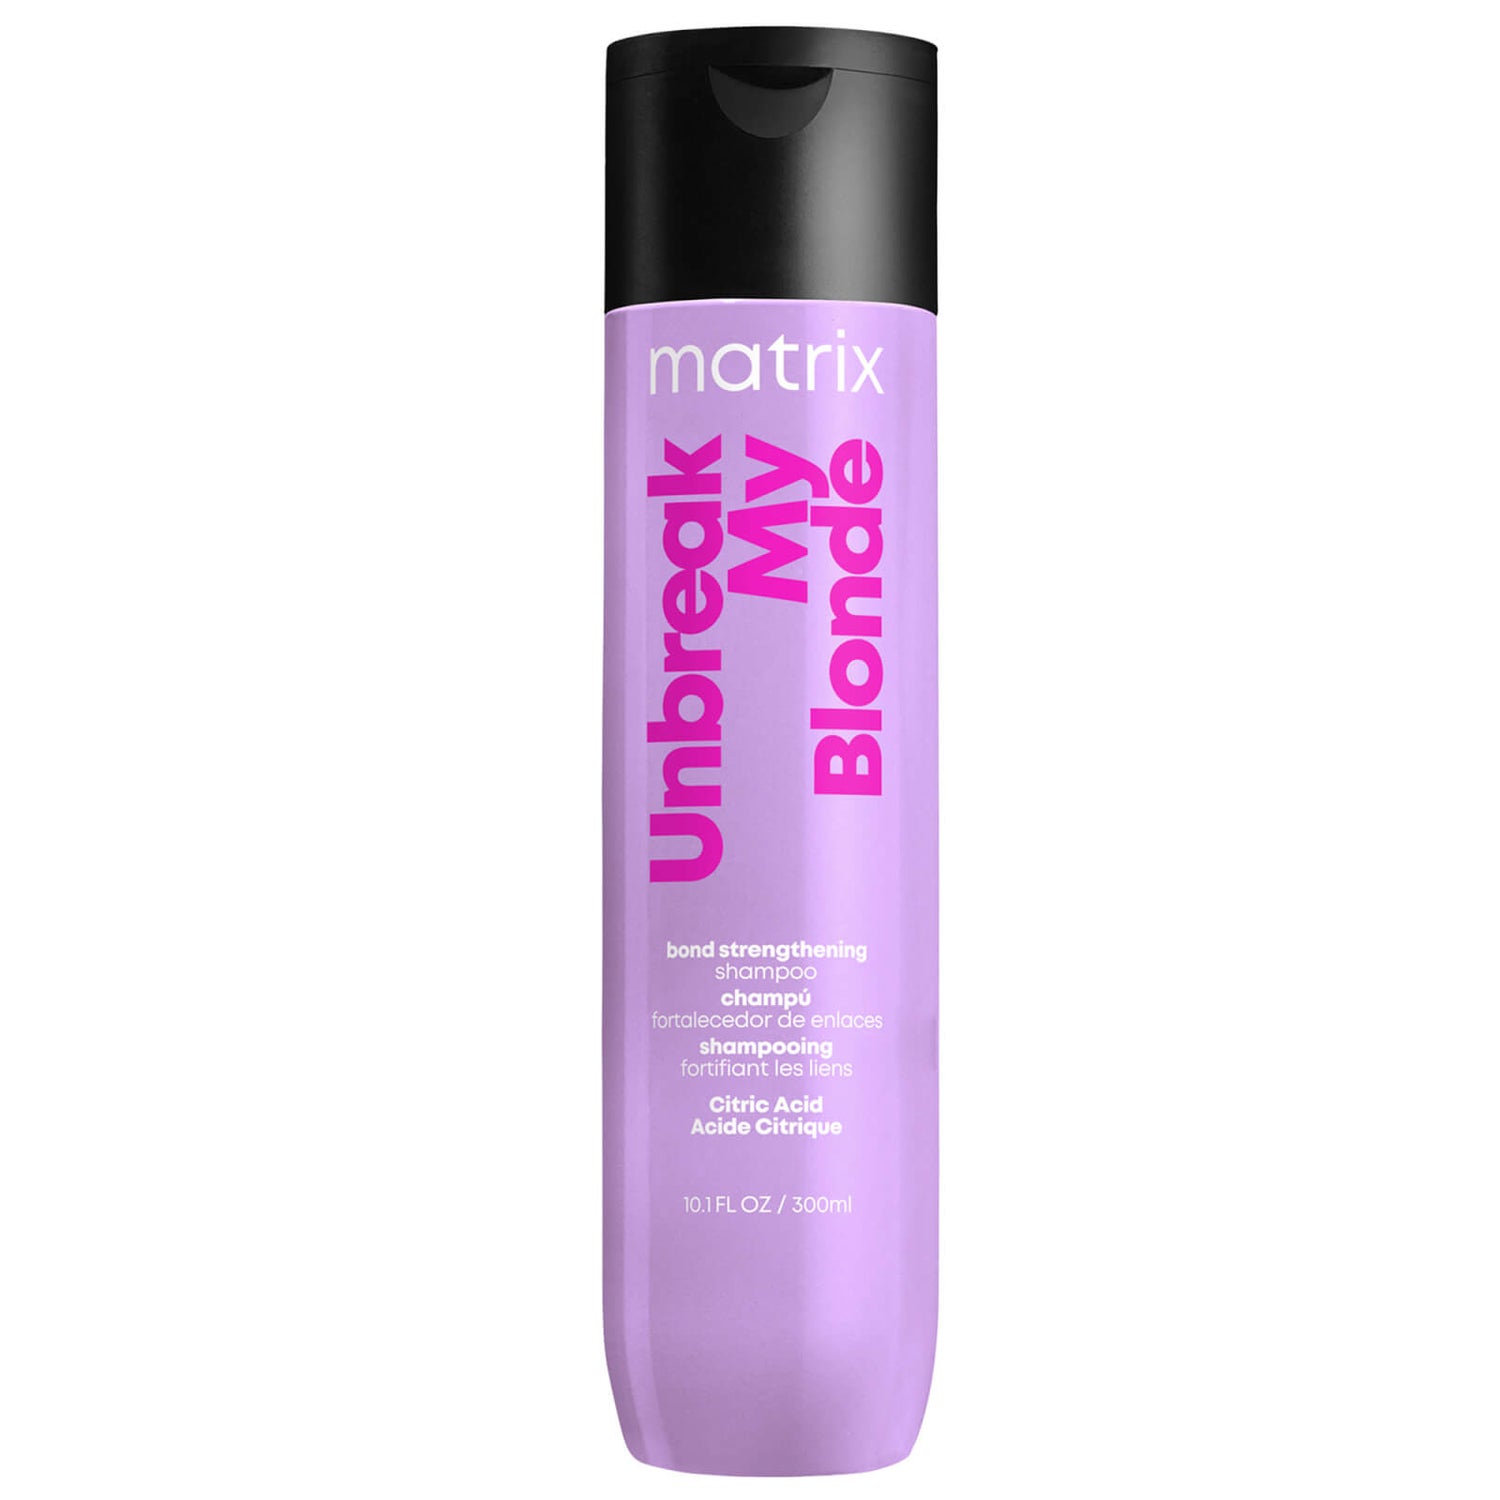 Matrix Resultados Totais Unbreak My Blonde Sulfate-Free Strengthening Shampoo 300ml